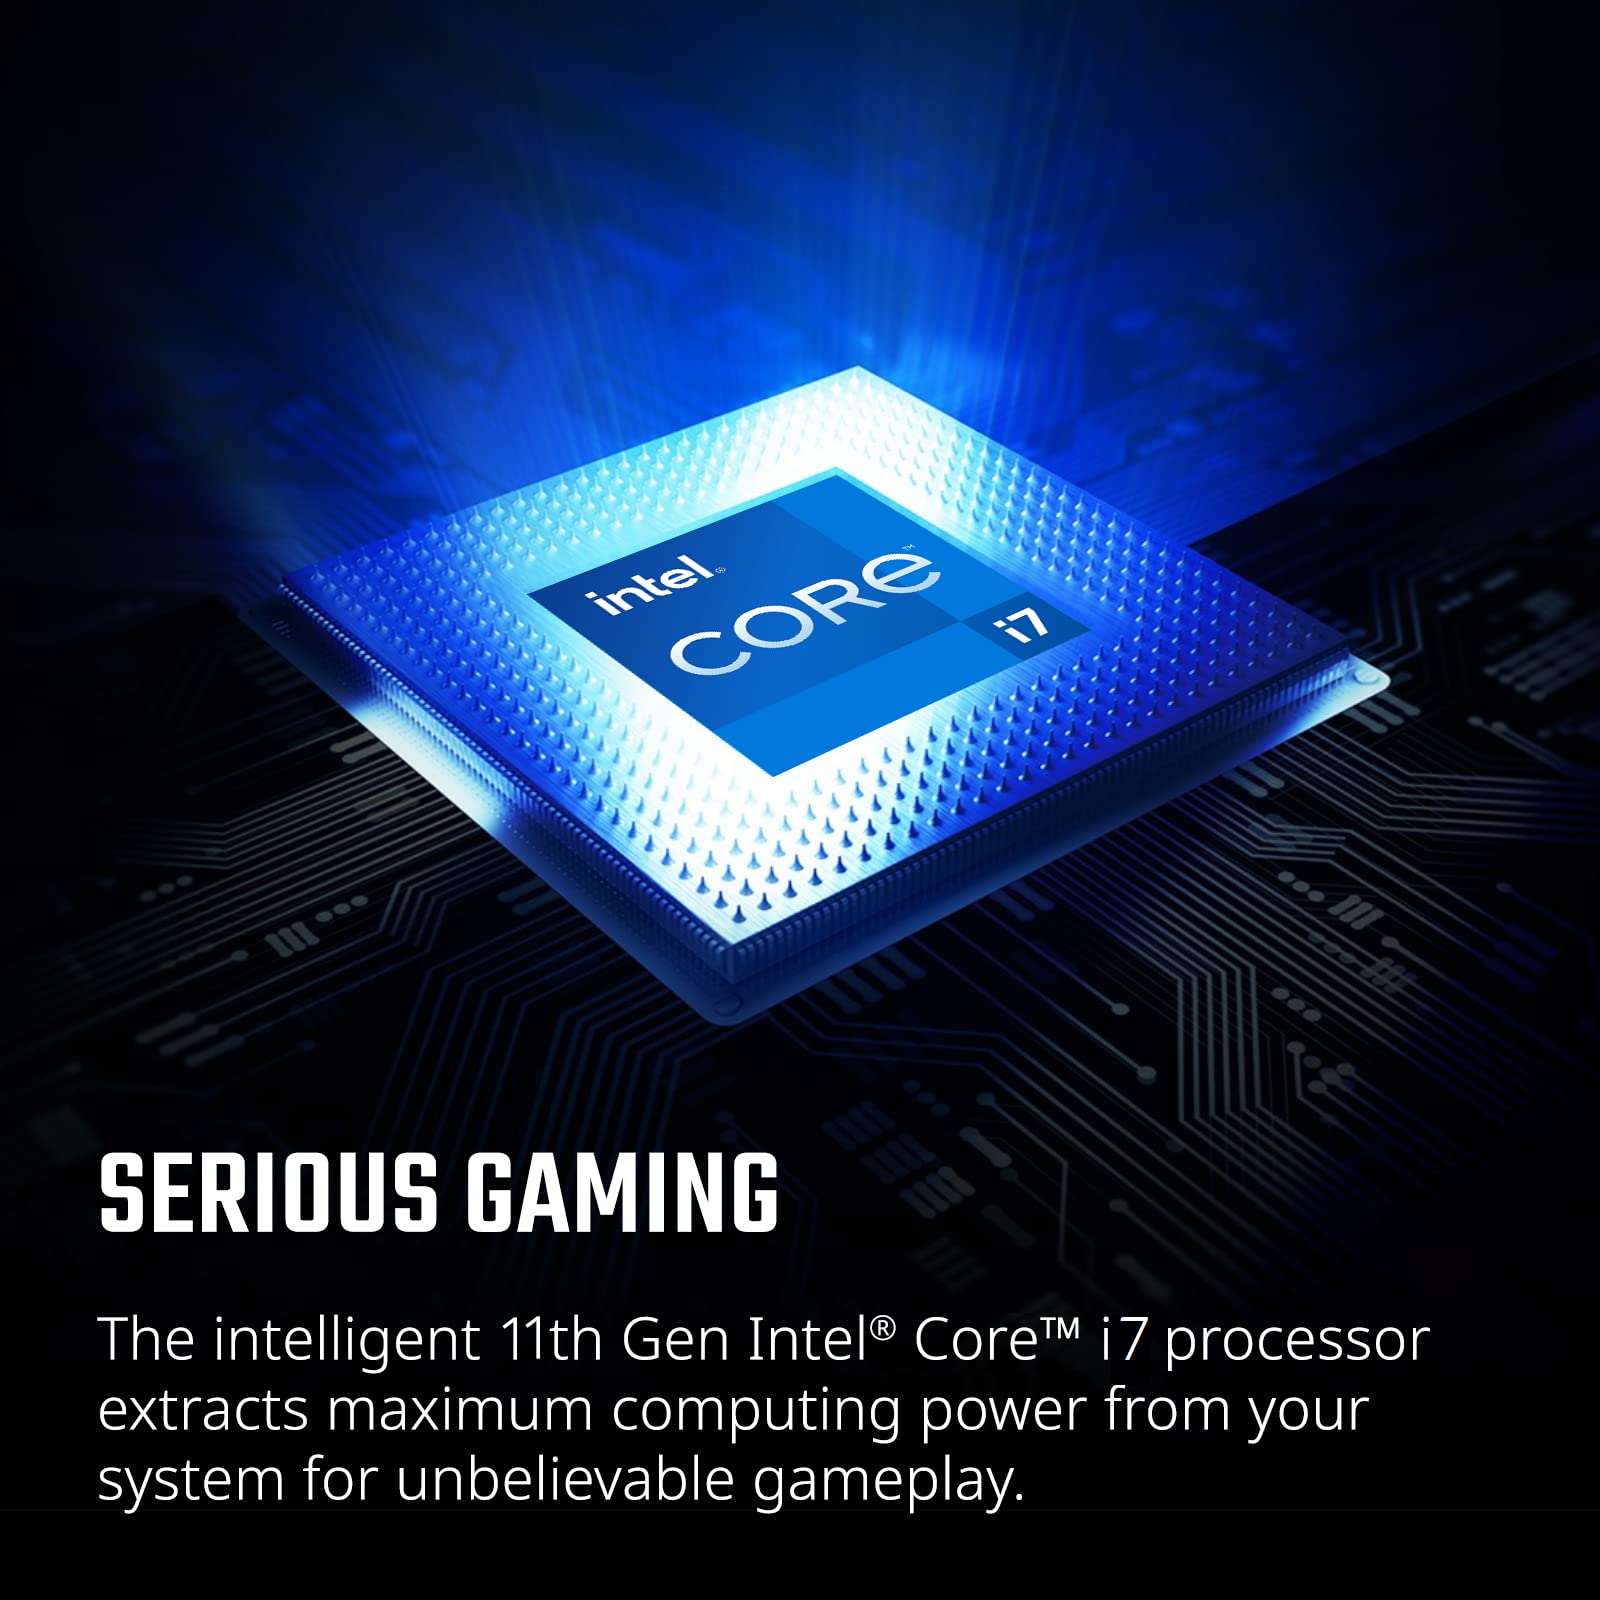 Acer Nitro 5 AN515-57-79TD Gaming Laptop | Intel Core i7-11800H | NVIDIA GeForce RTX 3050 Ti Laptop GPU | 15.6